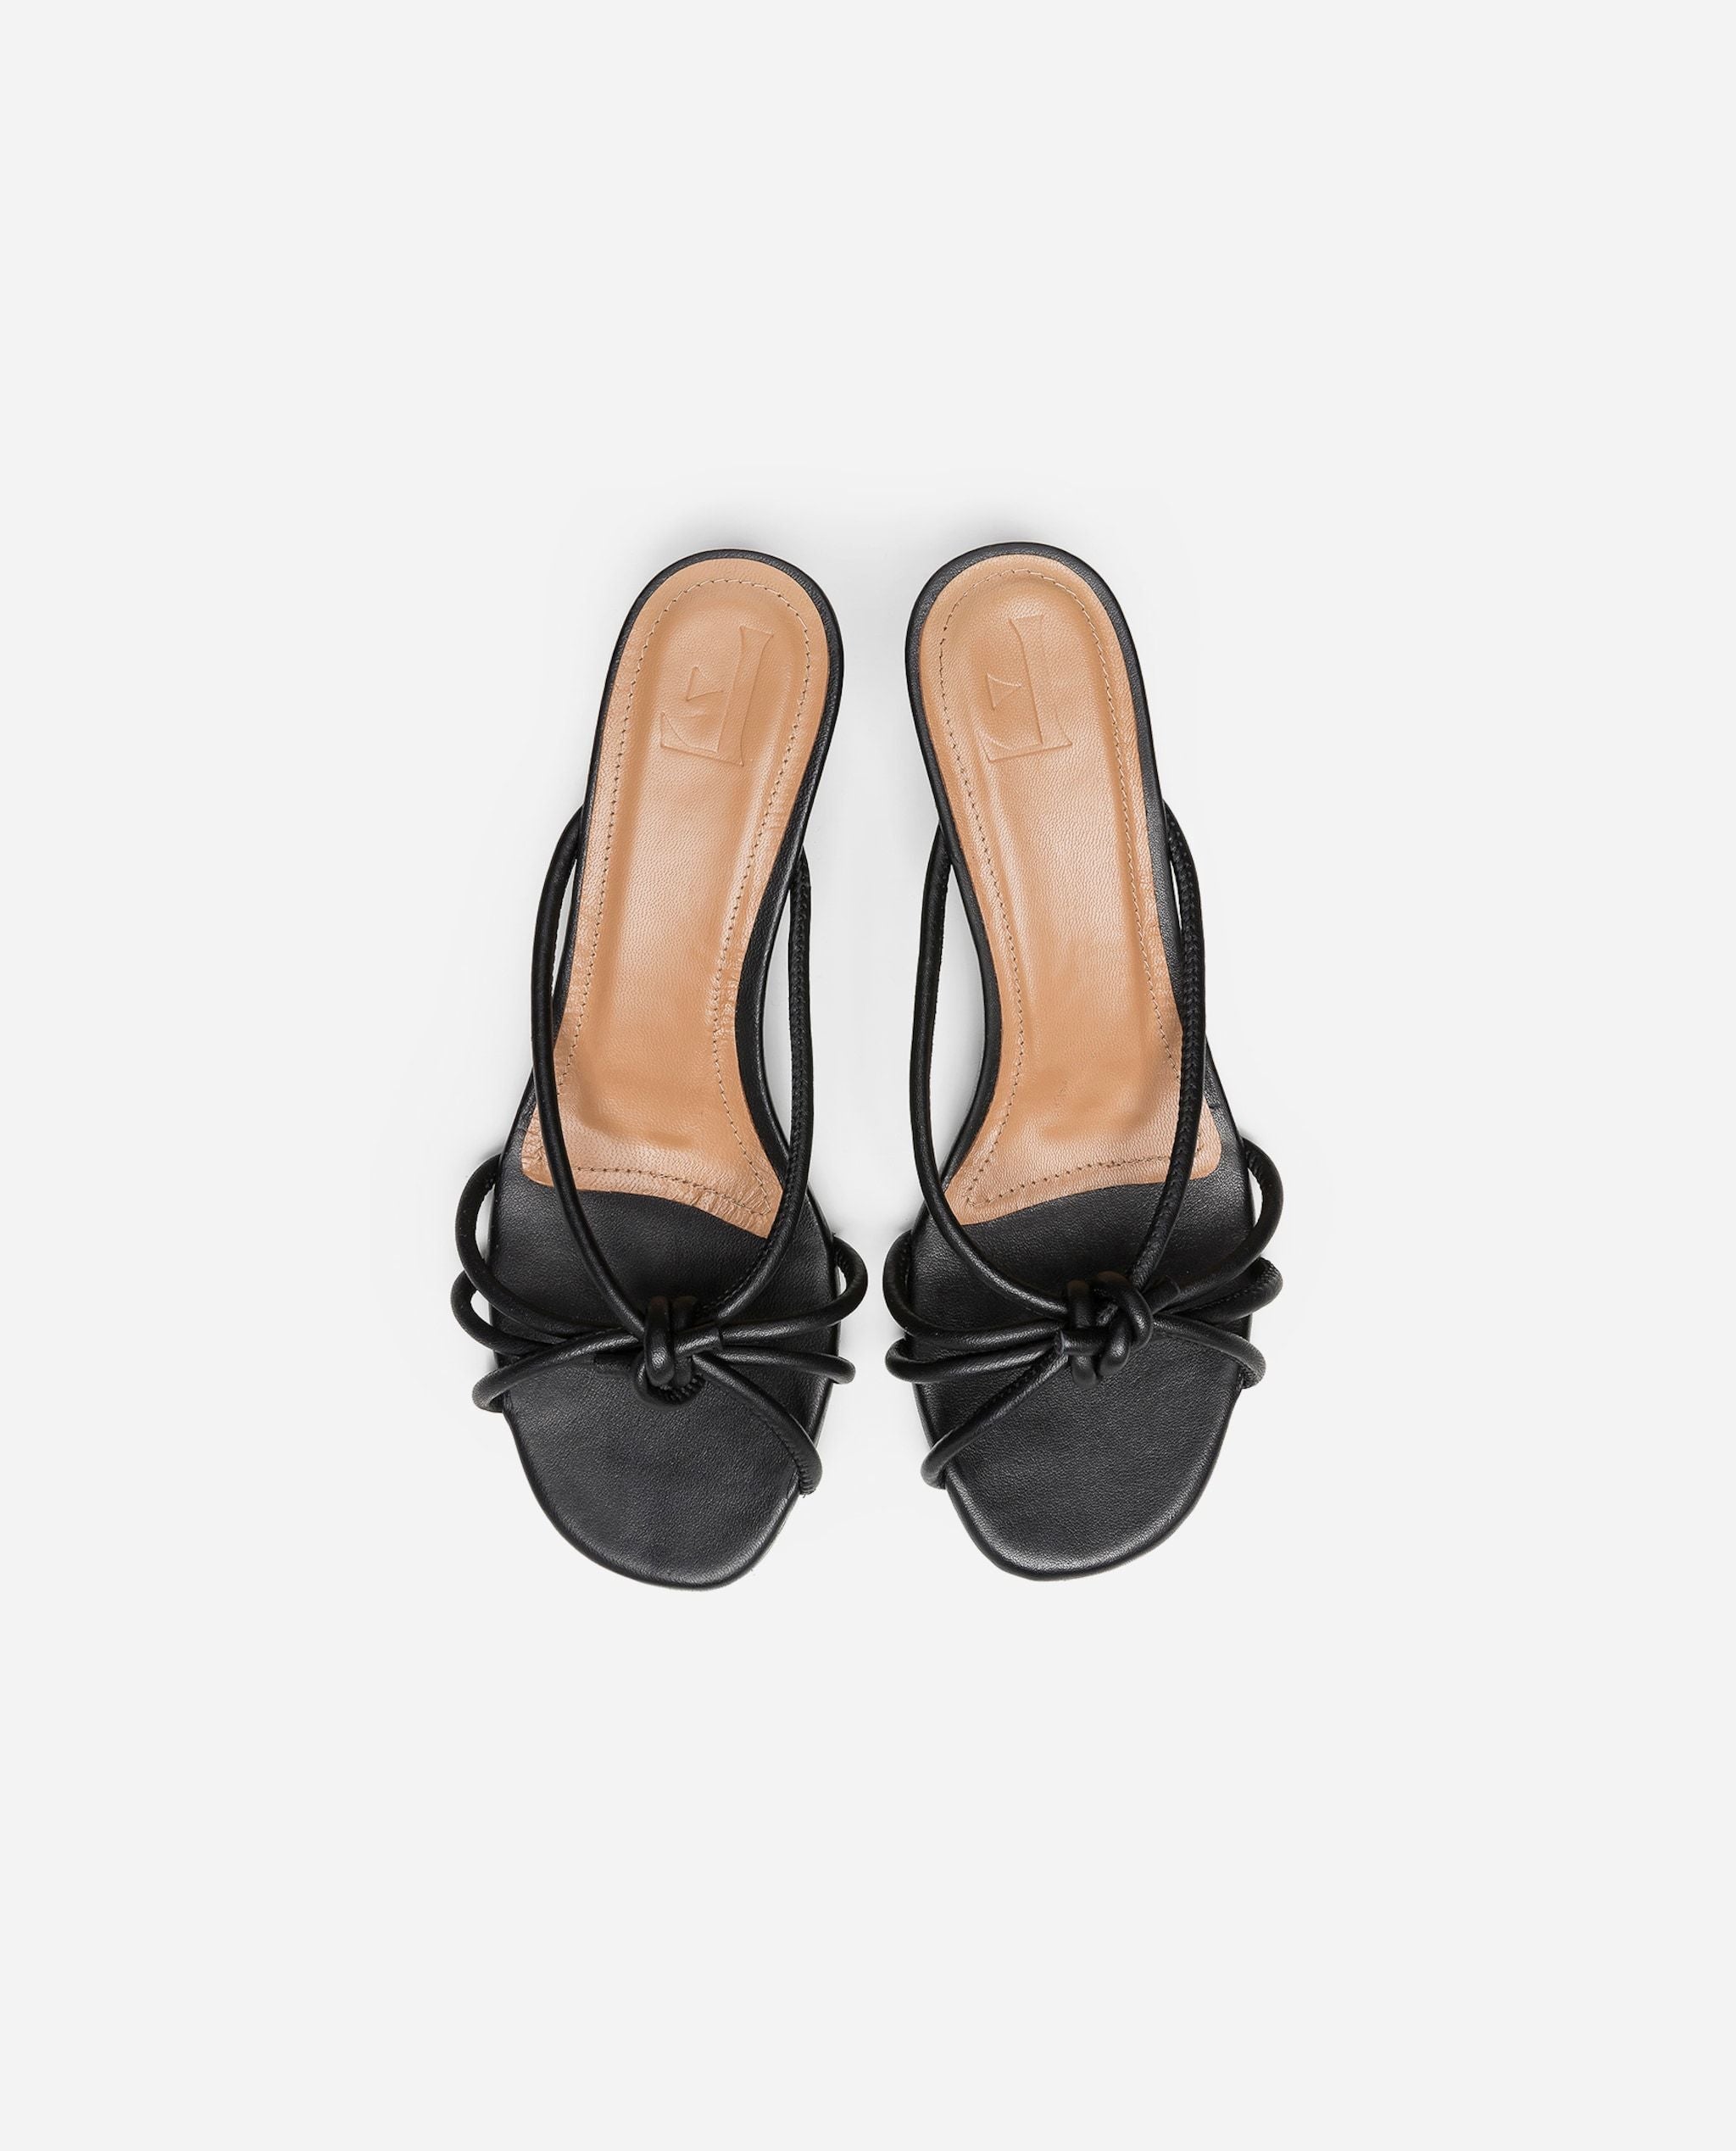 Eunice Leather Black Heeled Sandals 20010411301-001 - 4